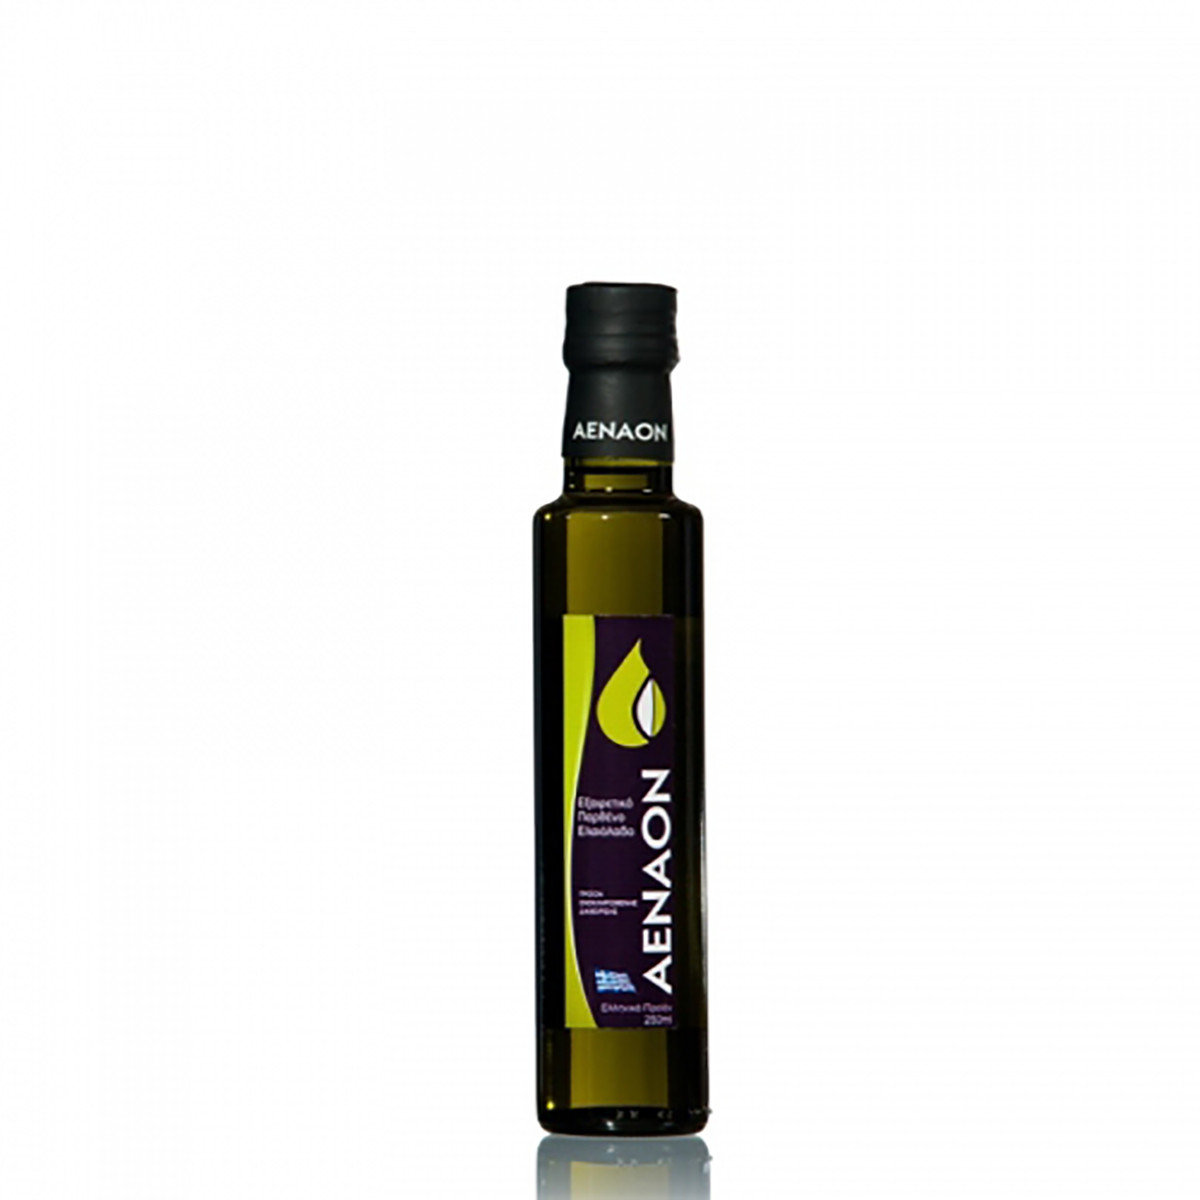 Aenanon maslinovo ulje, 250 ml 